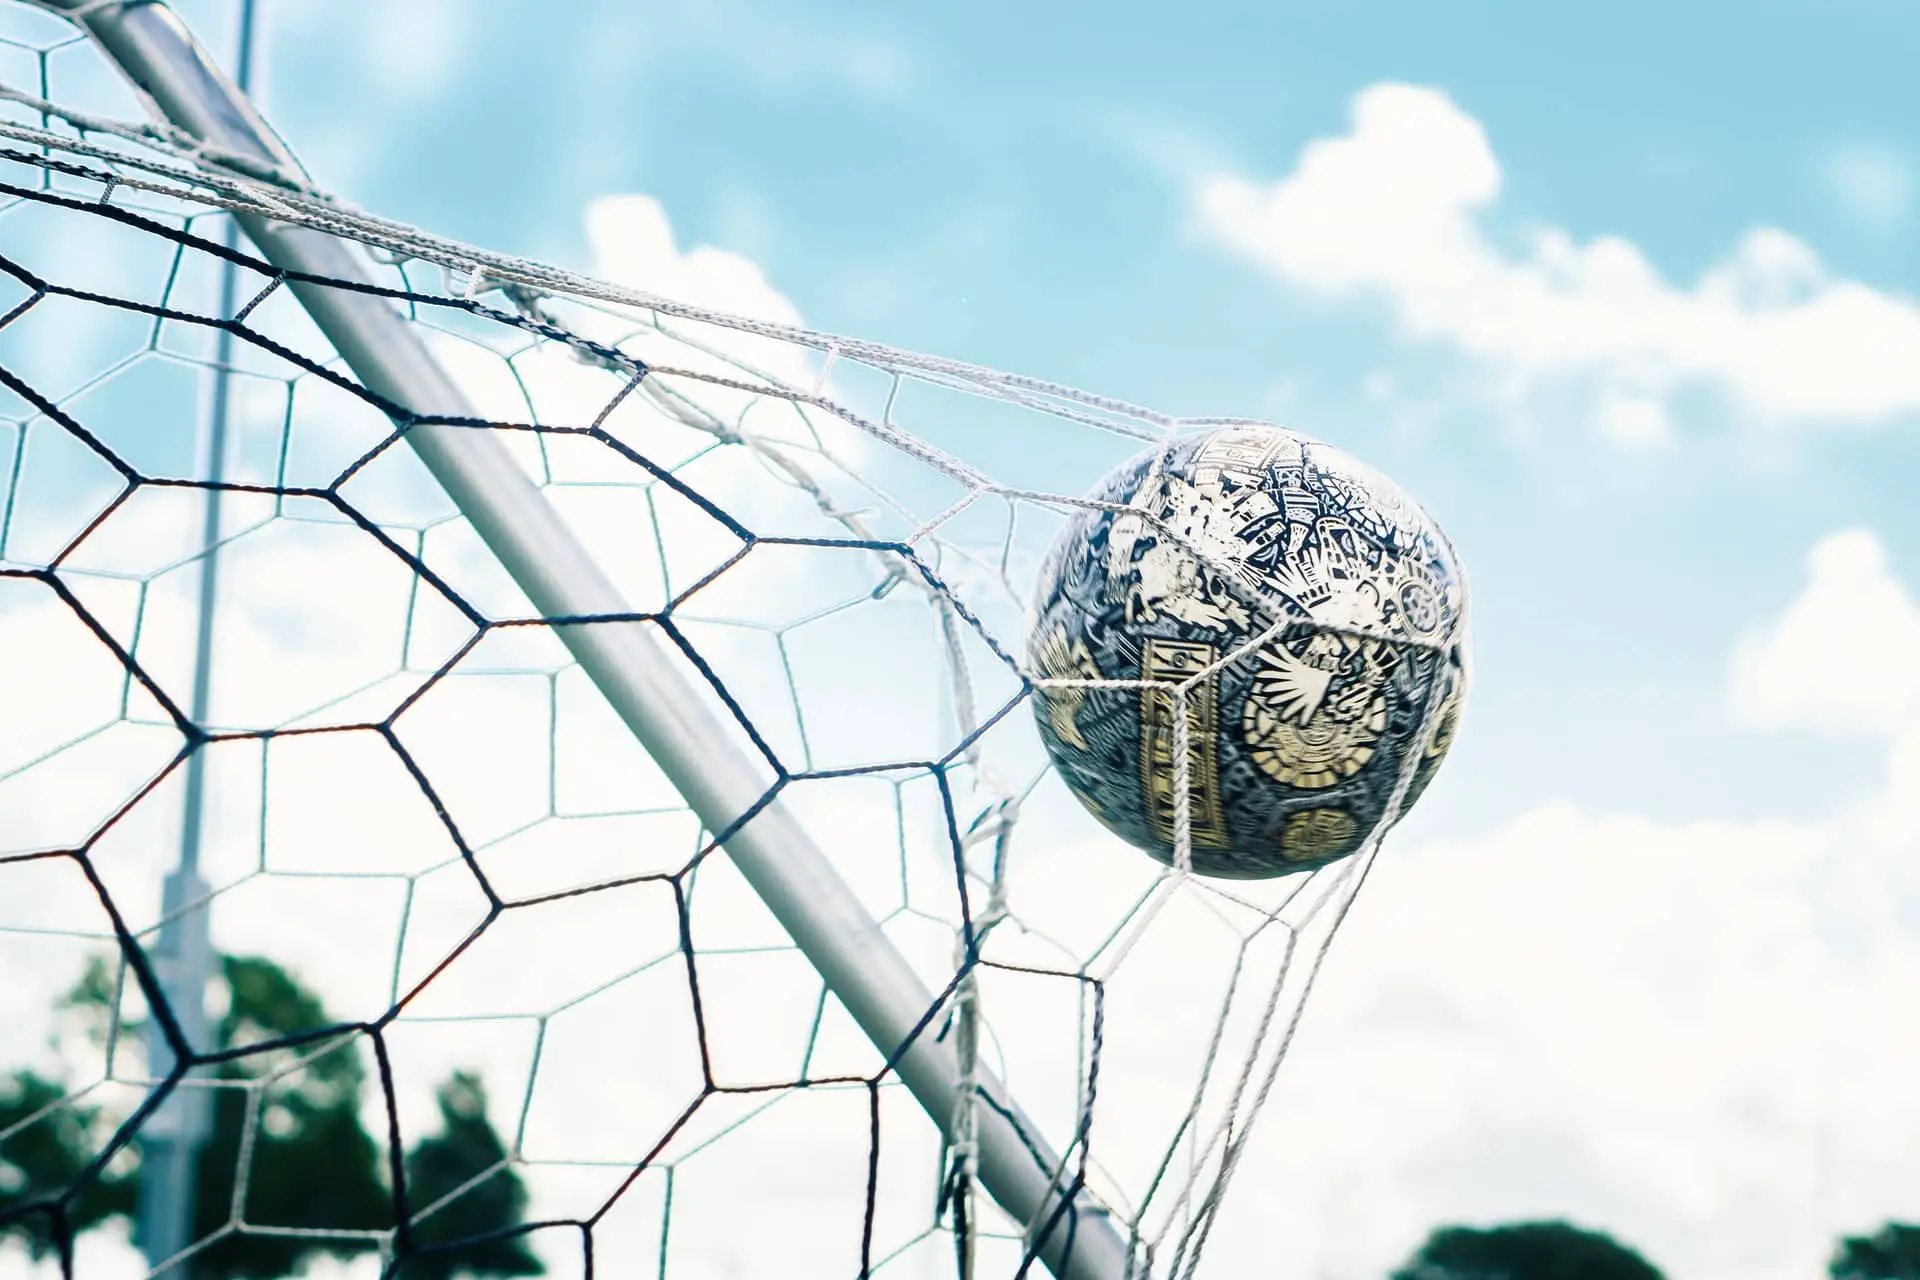 football in goal net